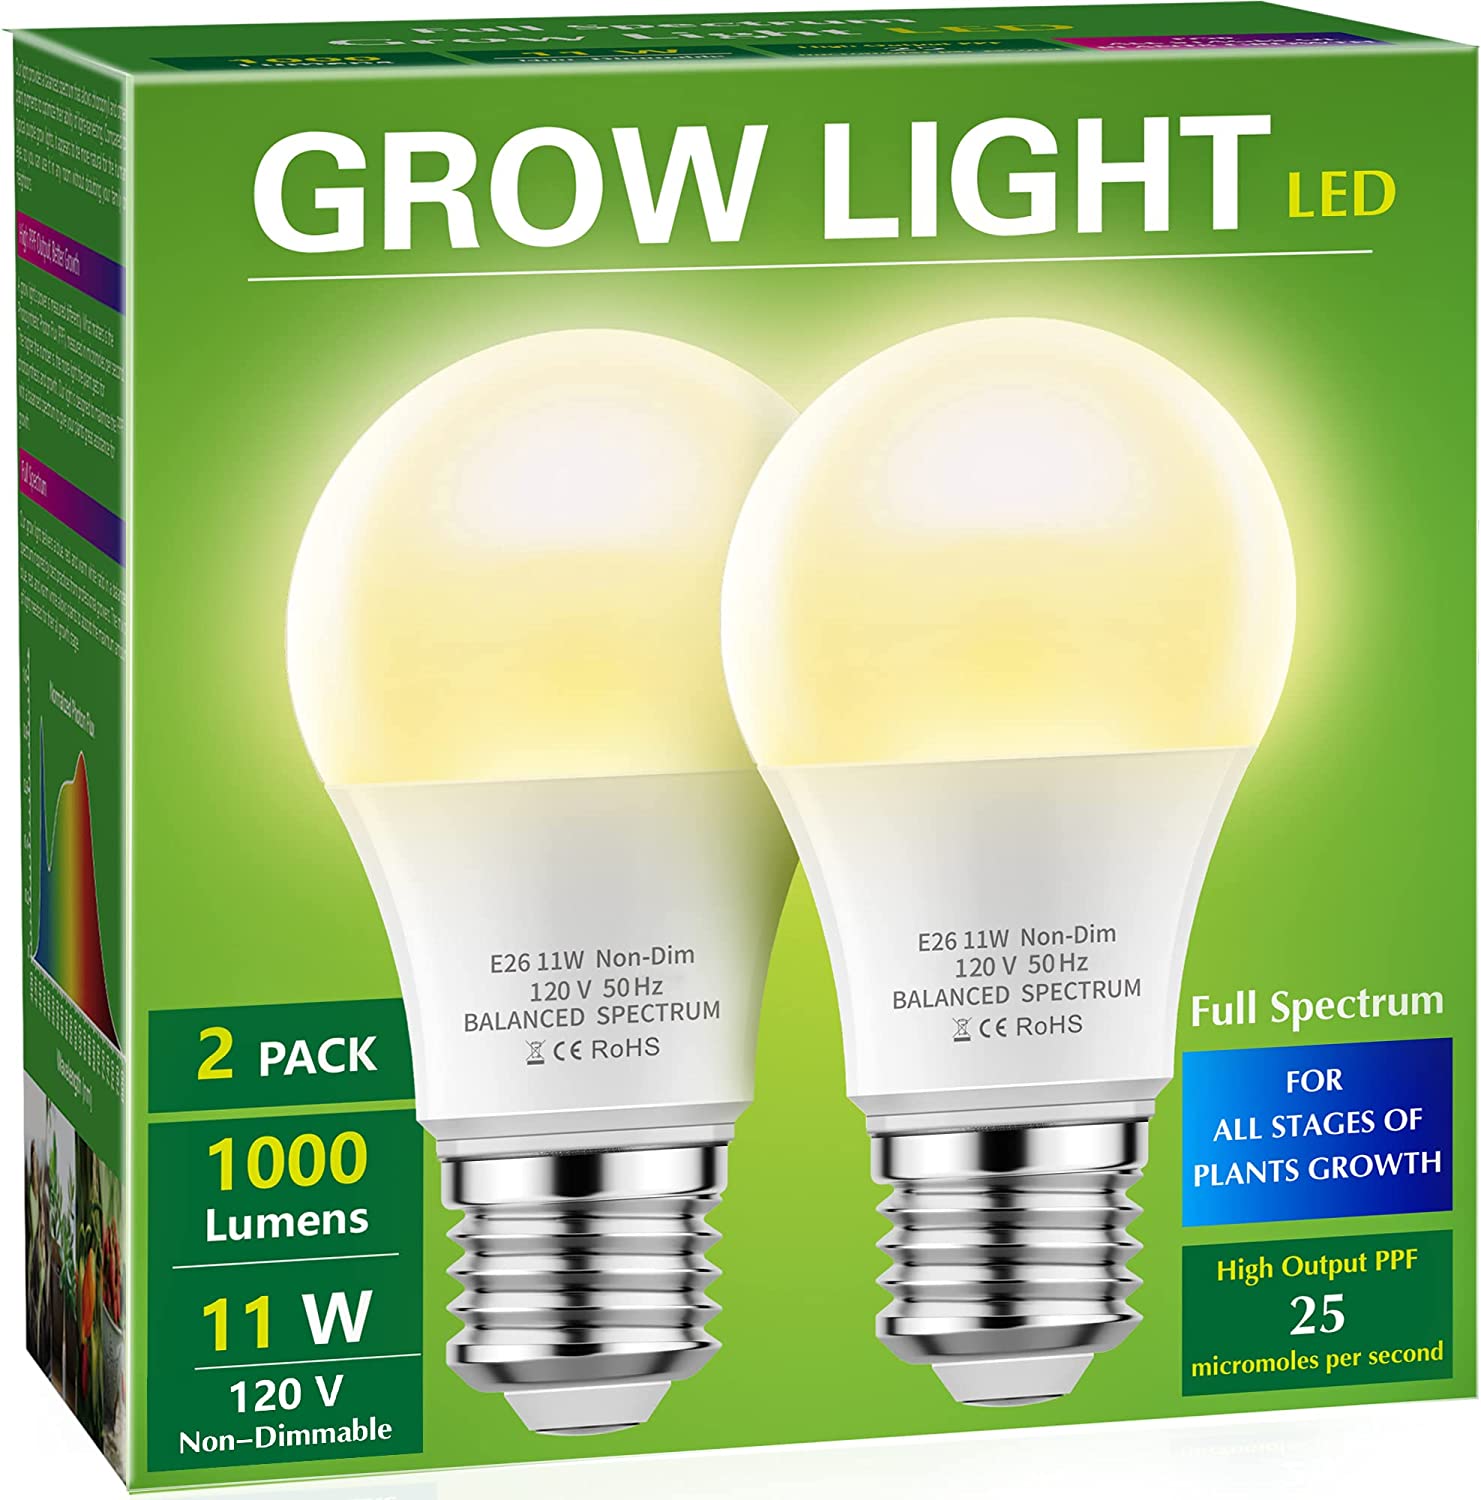 2-Pack Briignite E26 Base 11W LED Grow Light Bulb $8.55 ($4.27 each) + Free Shipping w/ Prime or on $25+